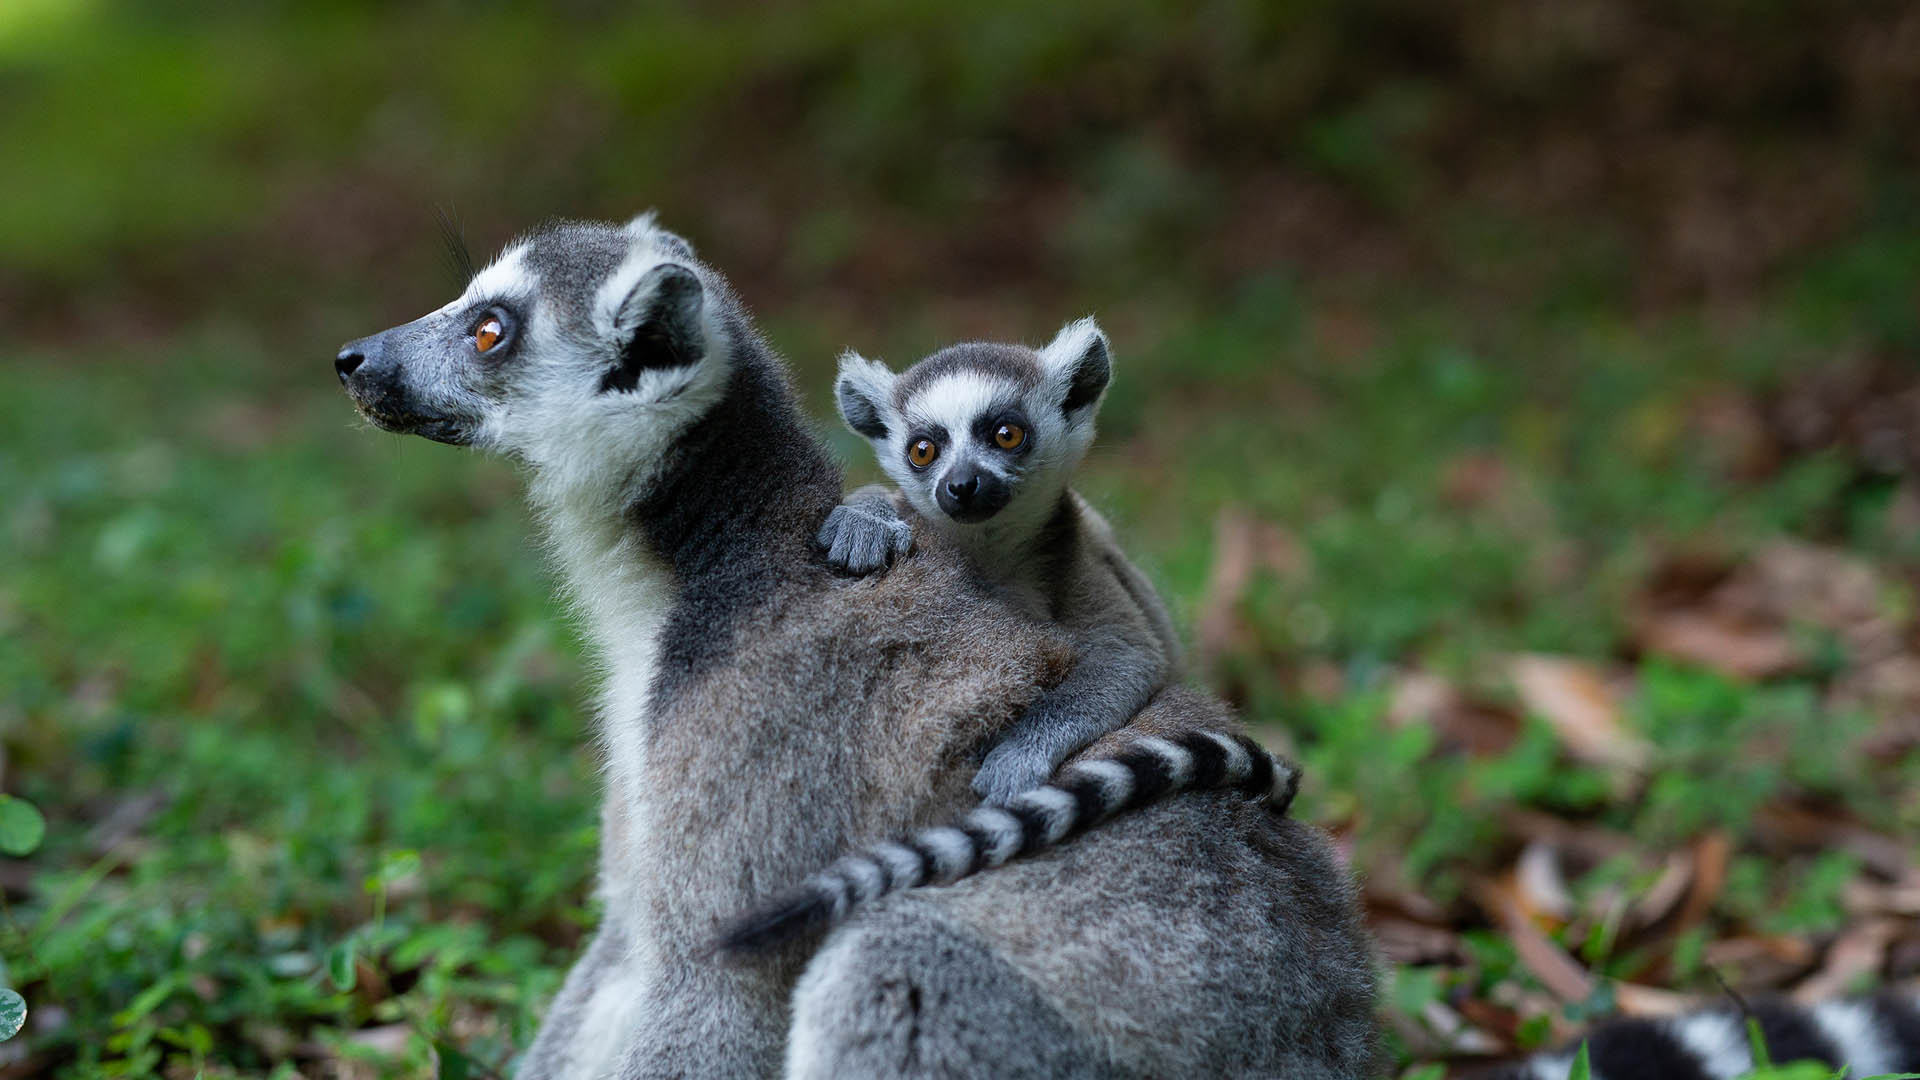 Wildlife, Madagascar operations